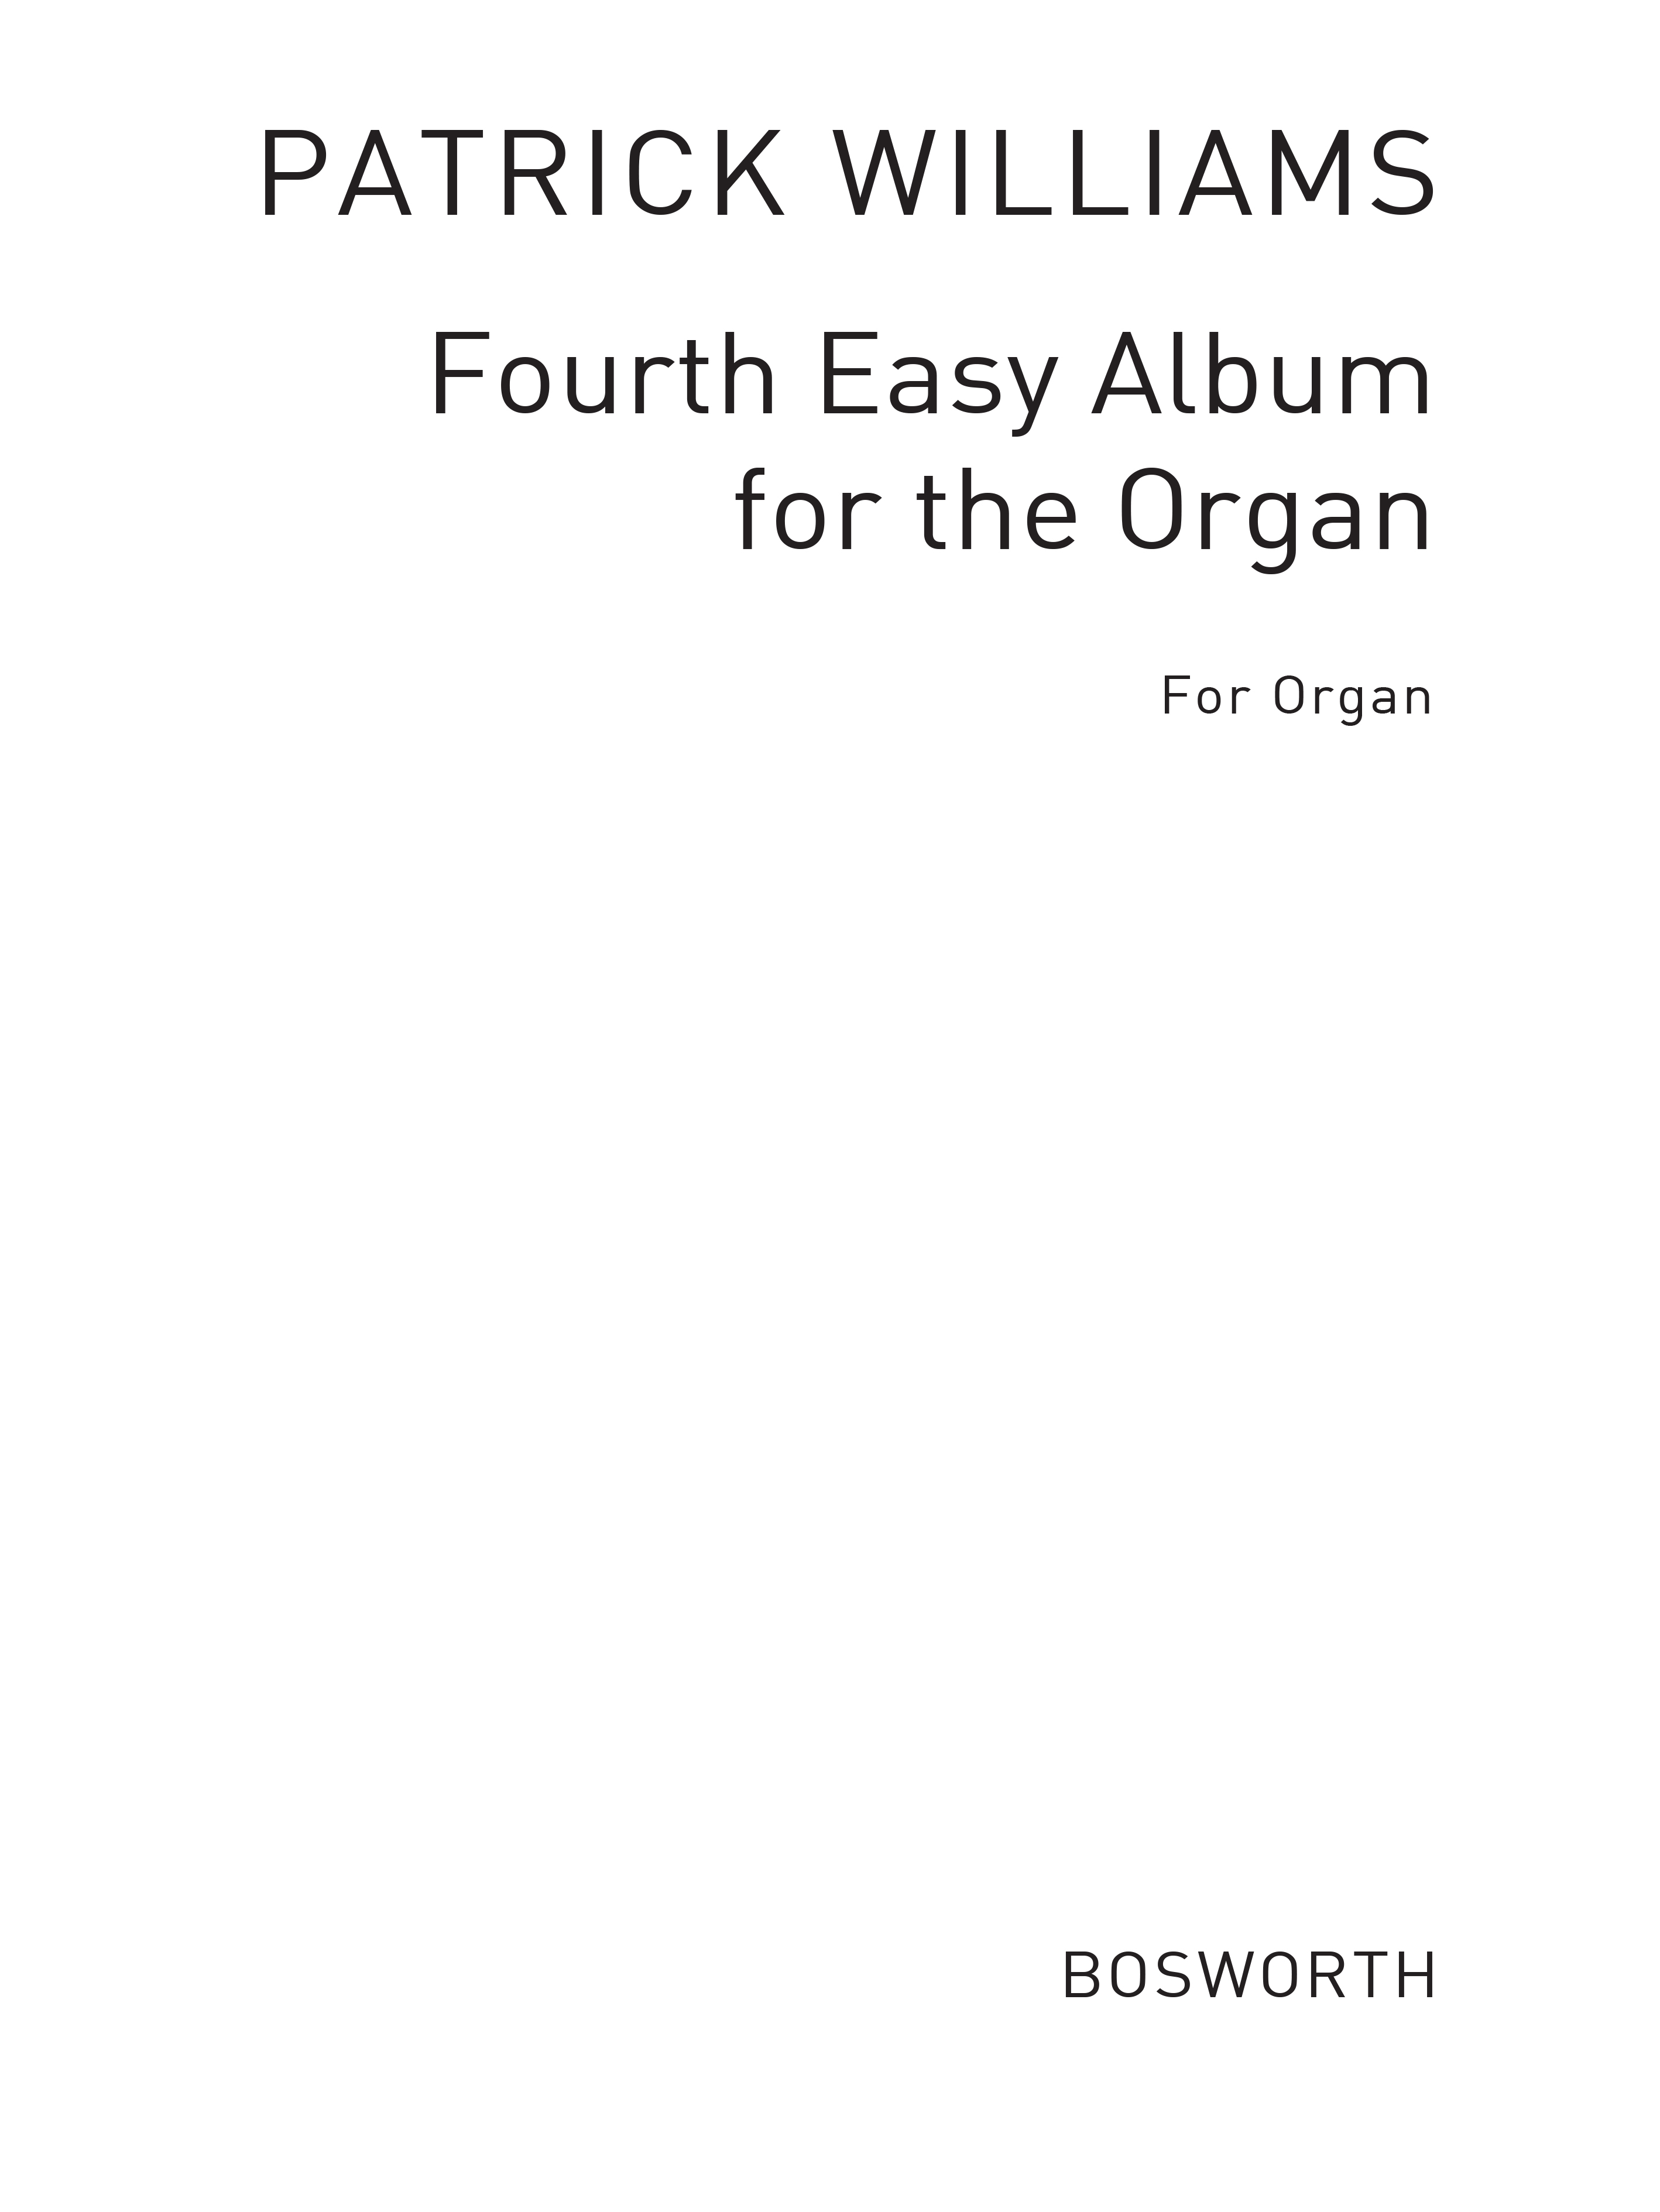 Patrick Williams: Williams: Fourth Easy Album For The Organ: Organ: Instrumental